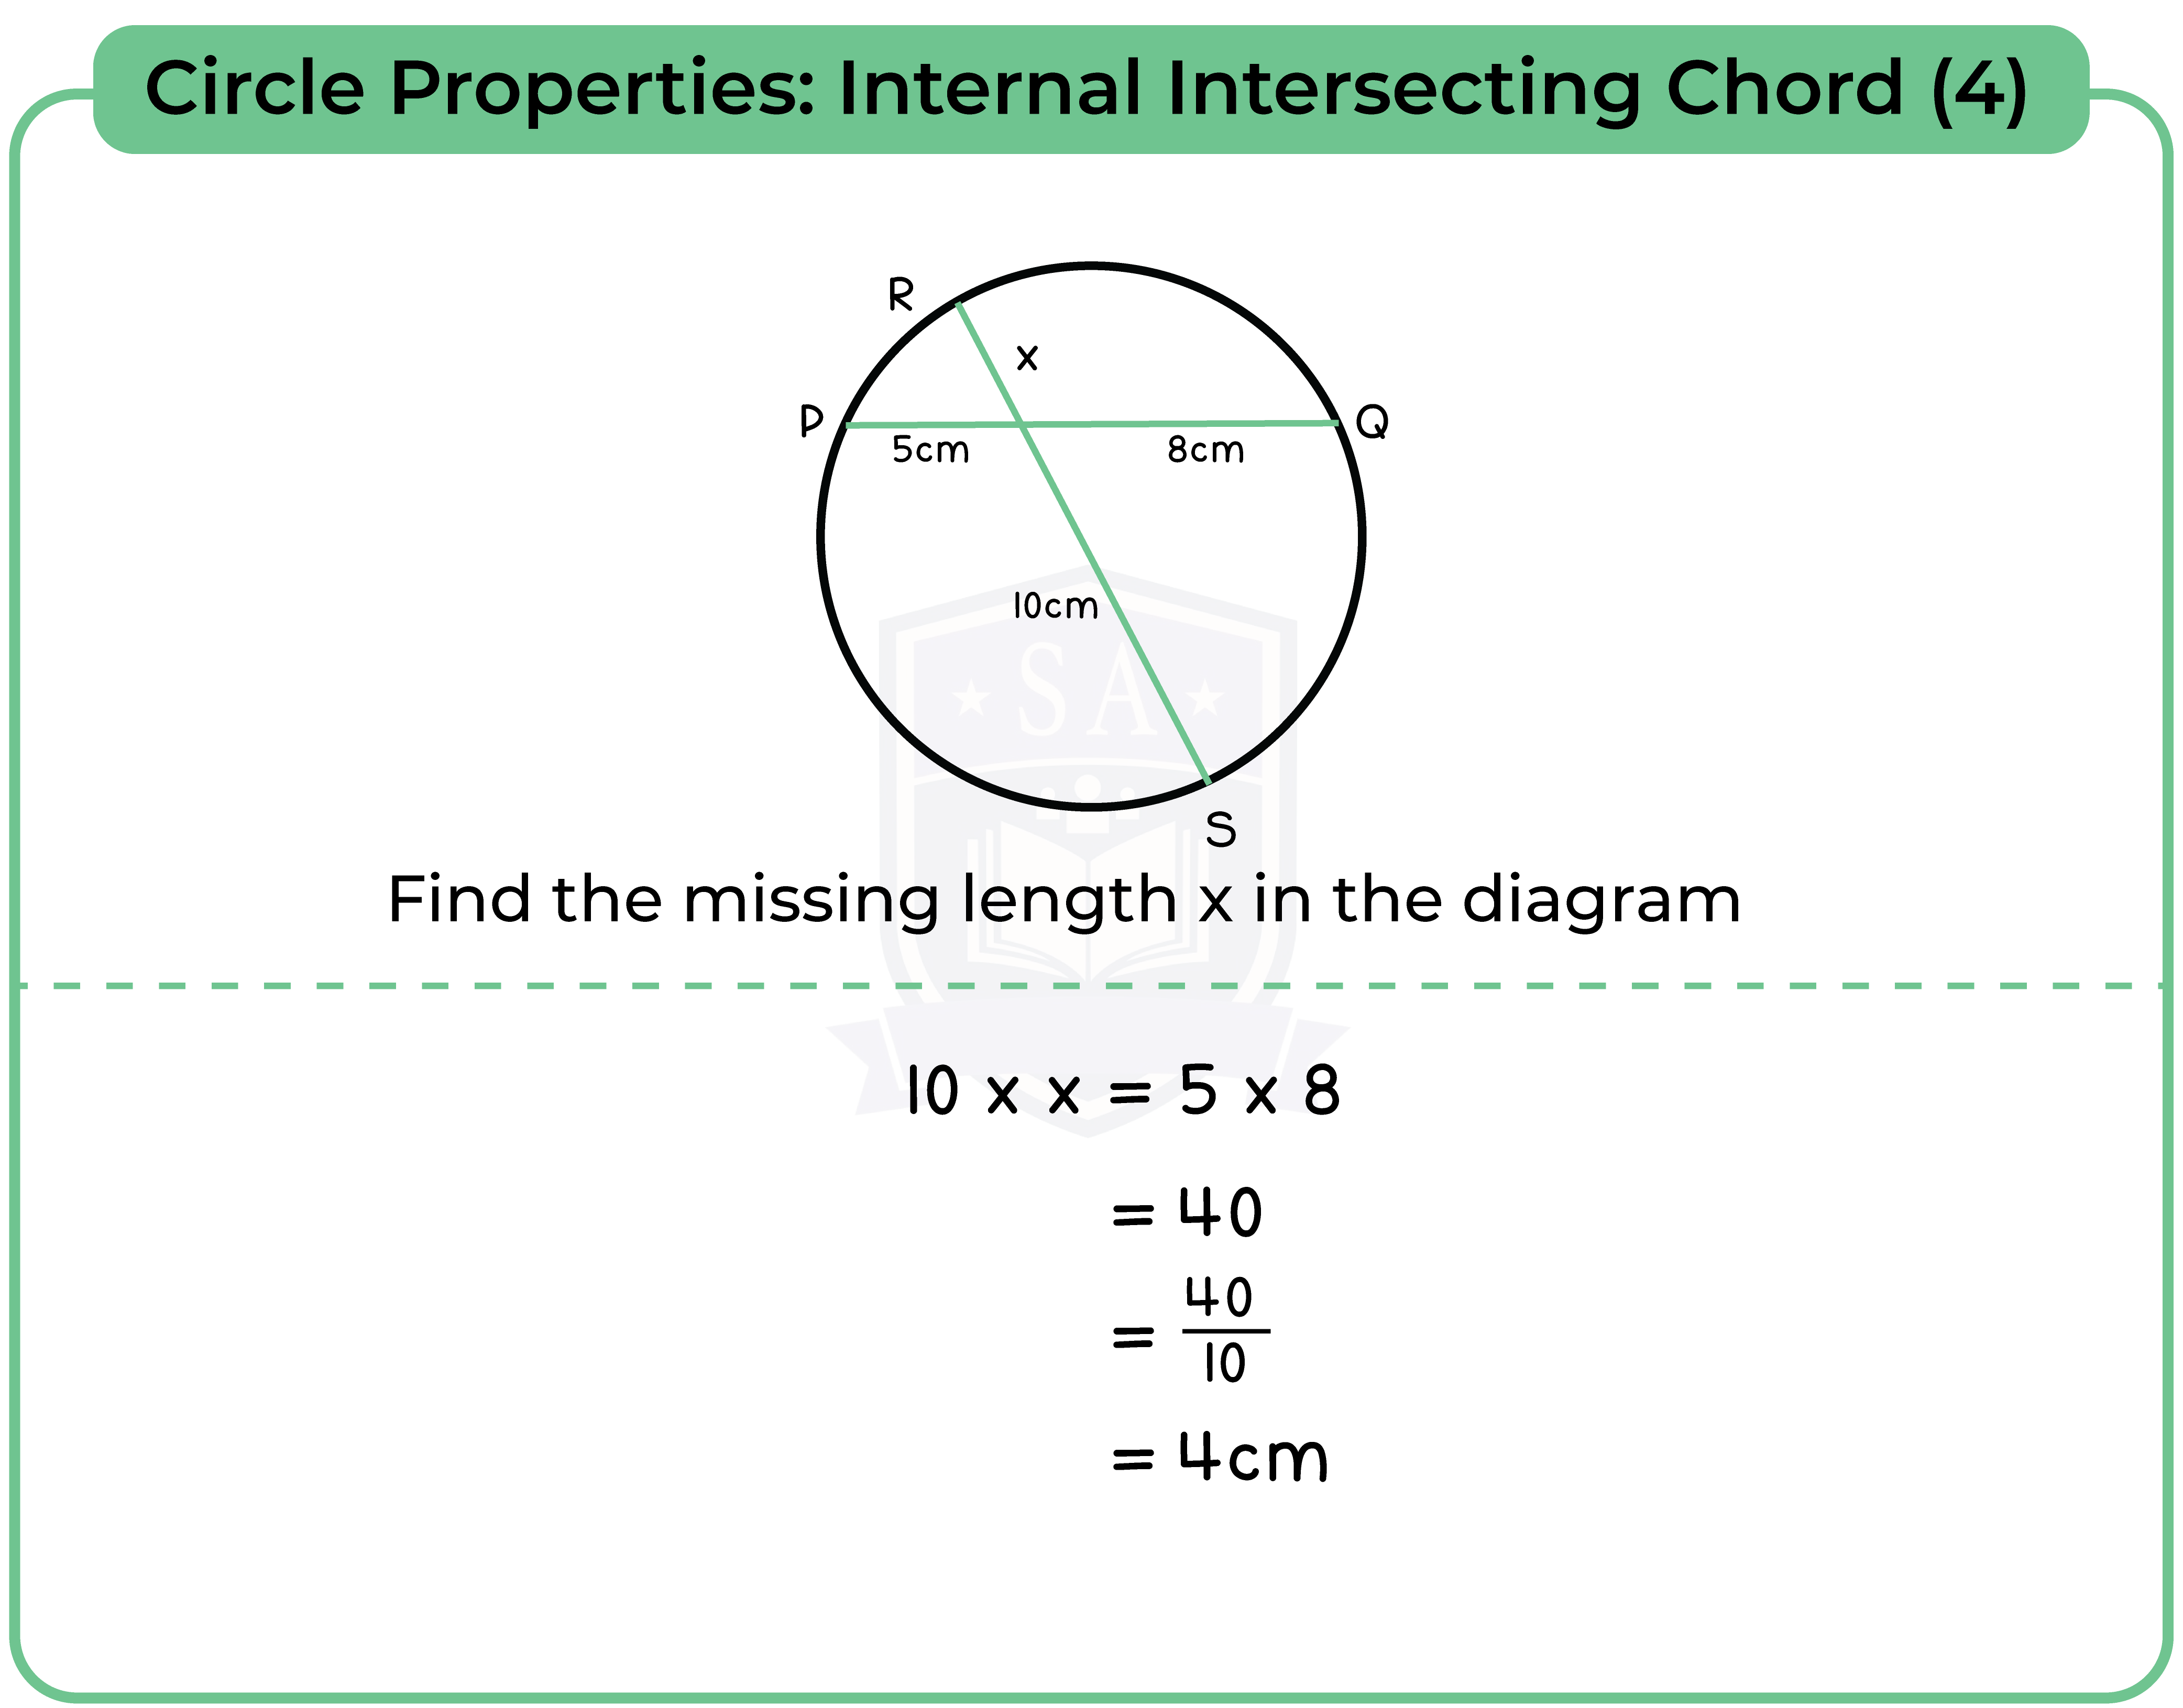 edexcel_igcse_mathematics a_topic 30_circle properties_006_Circle Properties: Internal Intersecting Chord (4)